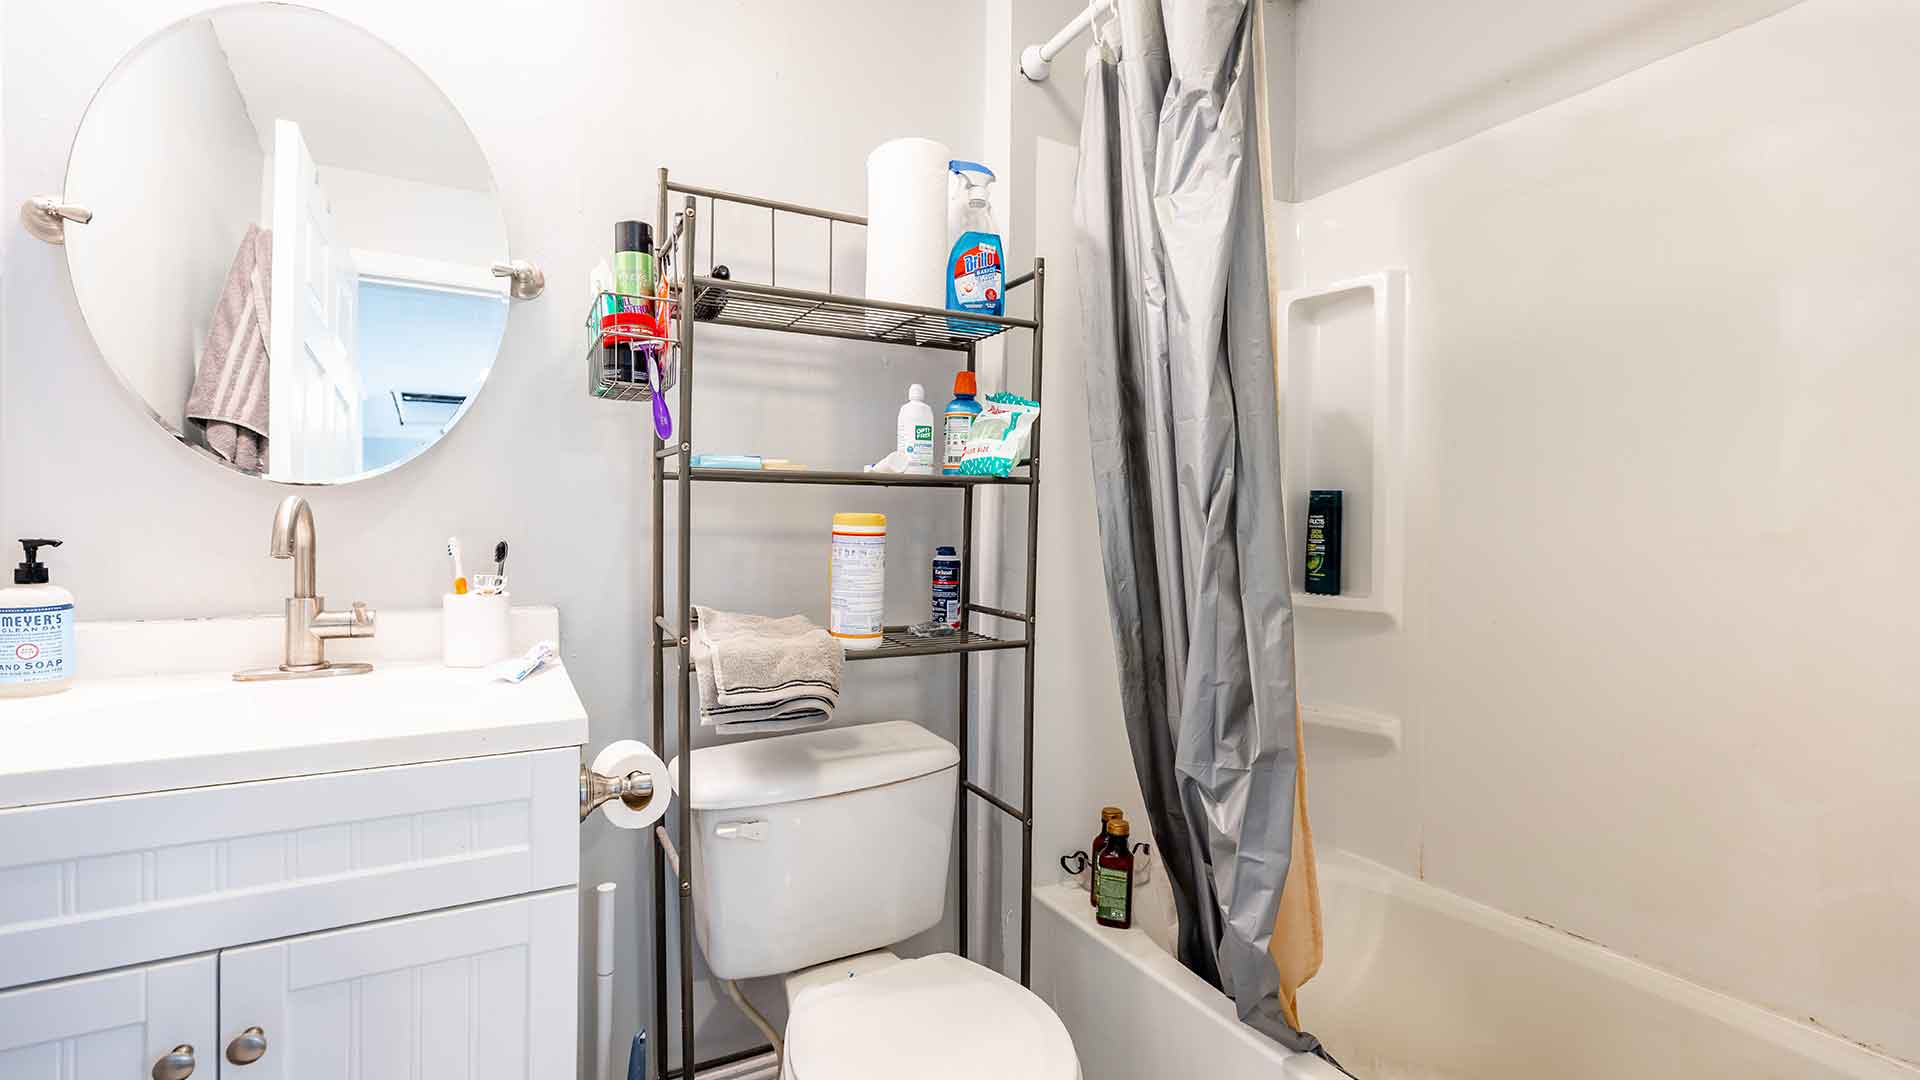 1 bathroom Single Family Homes for Rent in Morgantown WV